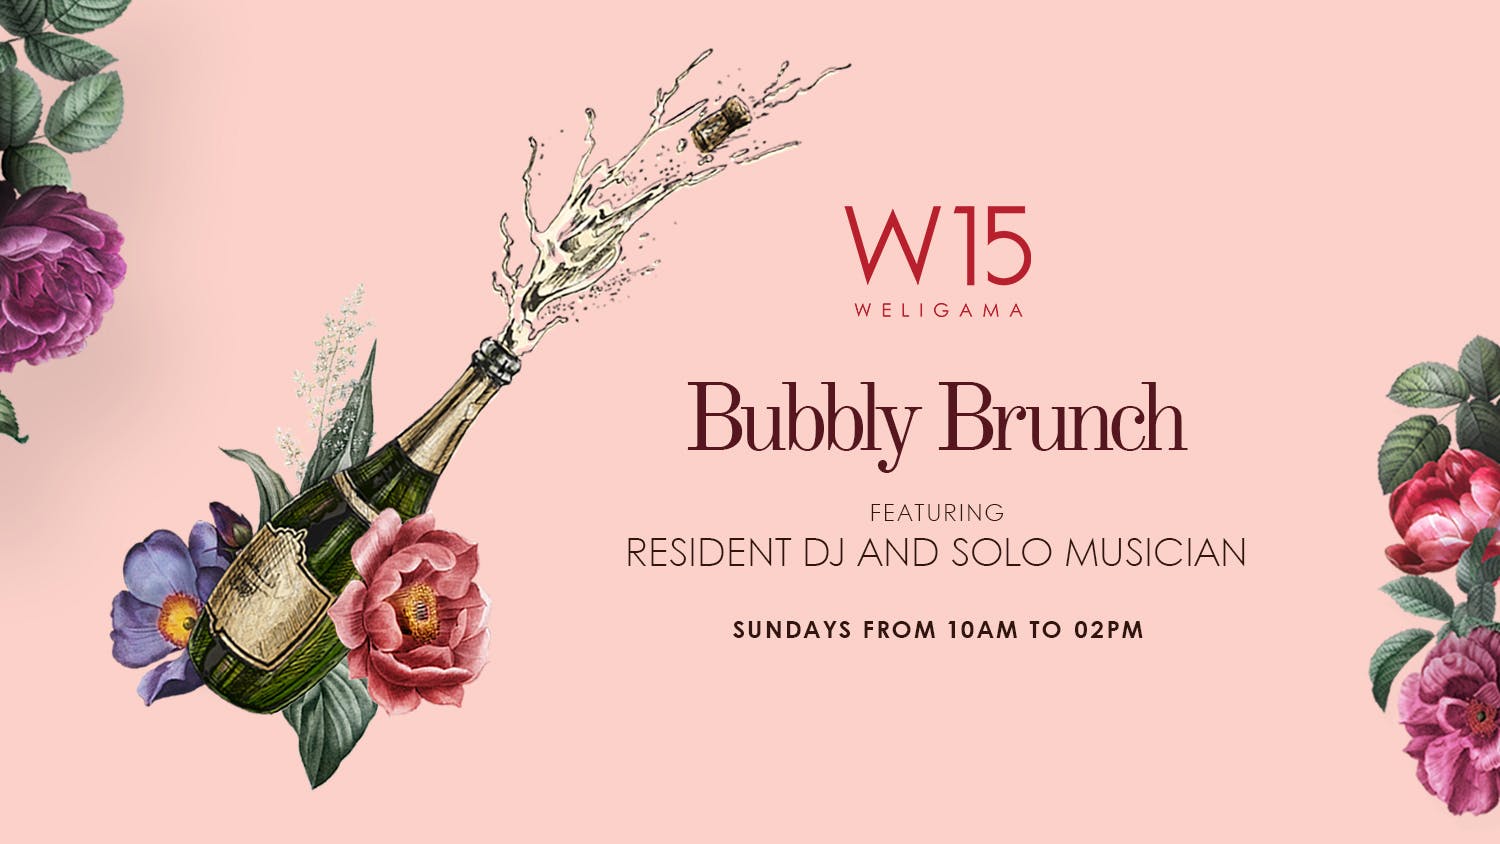 Sunday Bubbly Brunch with W15 Weligama